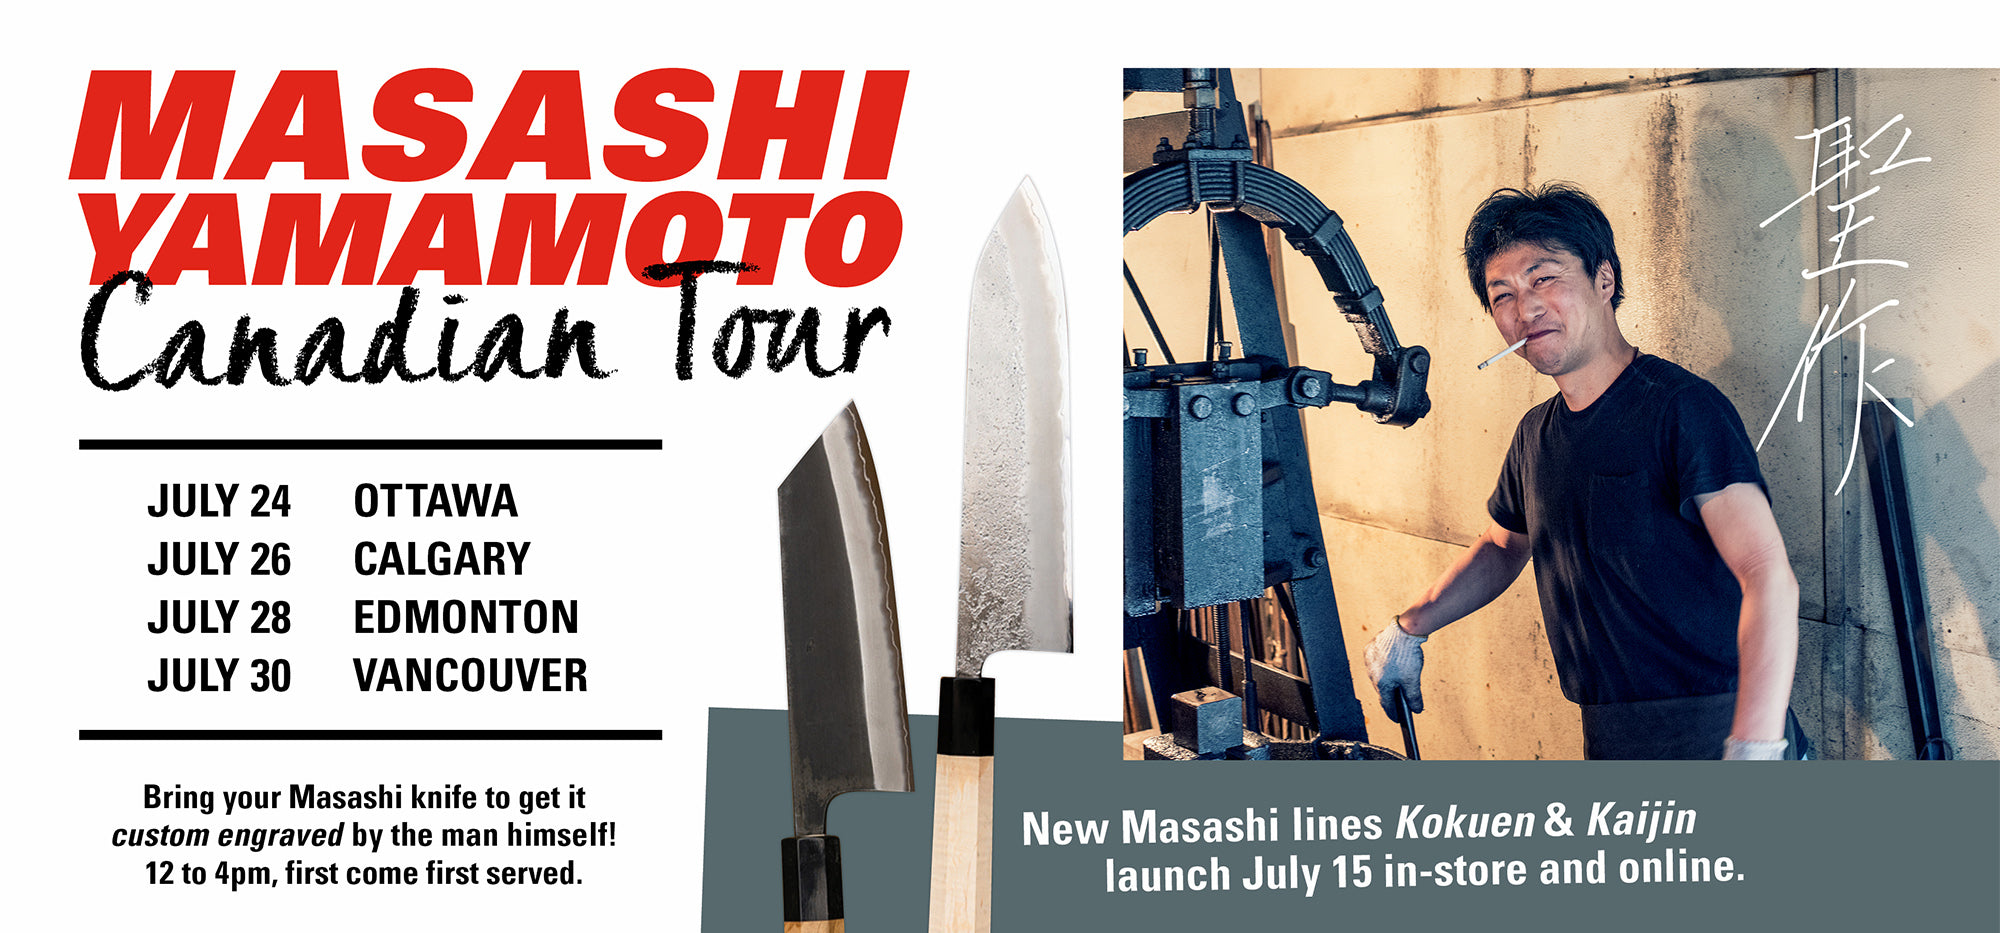 Master Blacksmith Masashi Yamamoto Visits Canada, Summer 2022